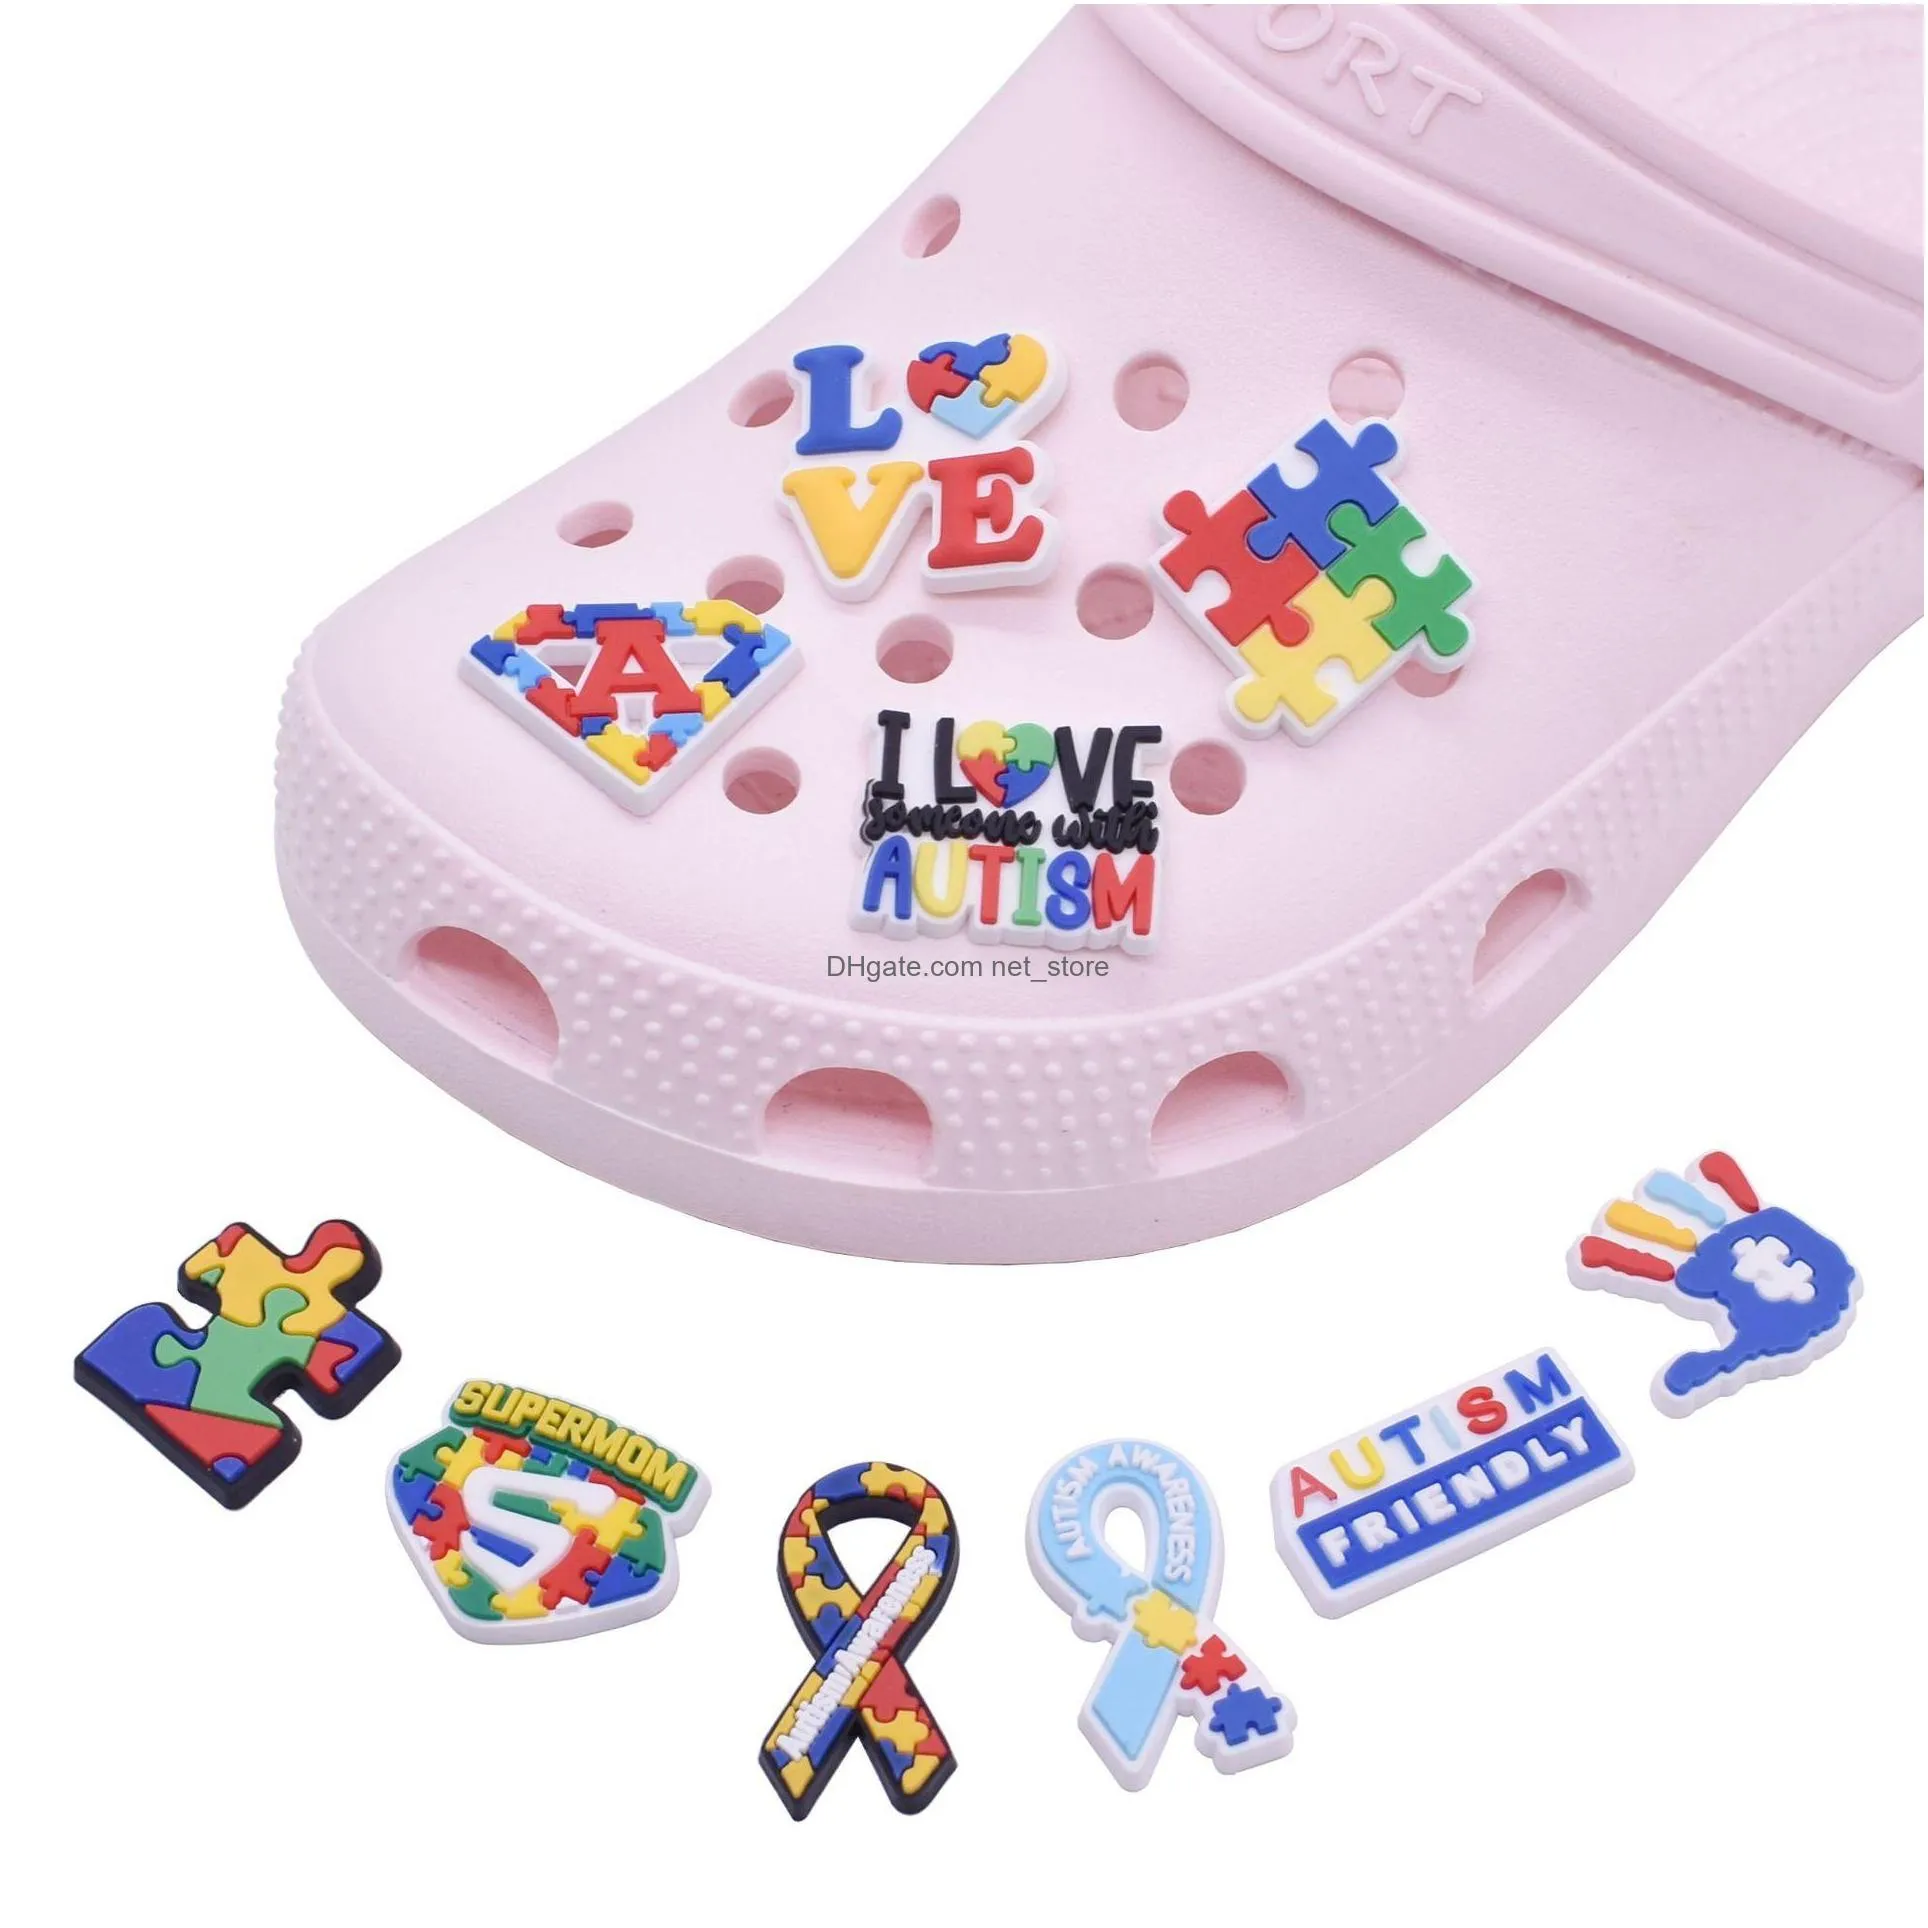 autism theme shoe parts accessories decoration charm buckle jibitz for croc charms clog wristband buttons